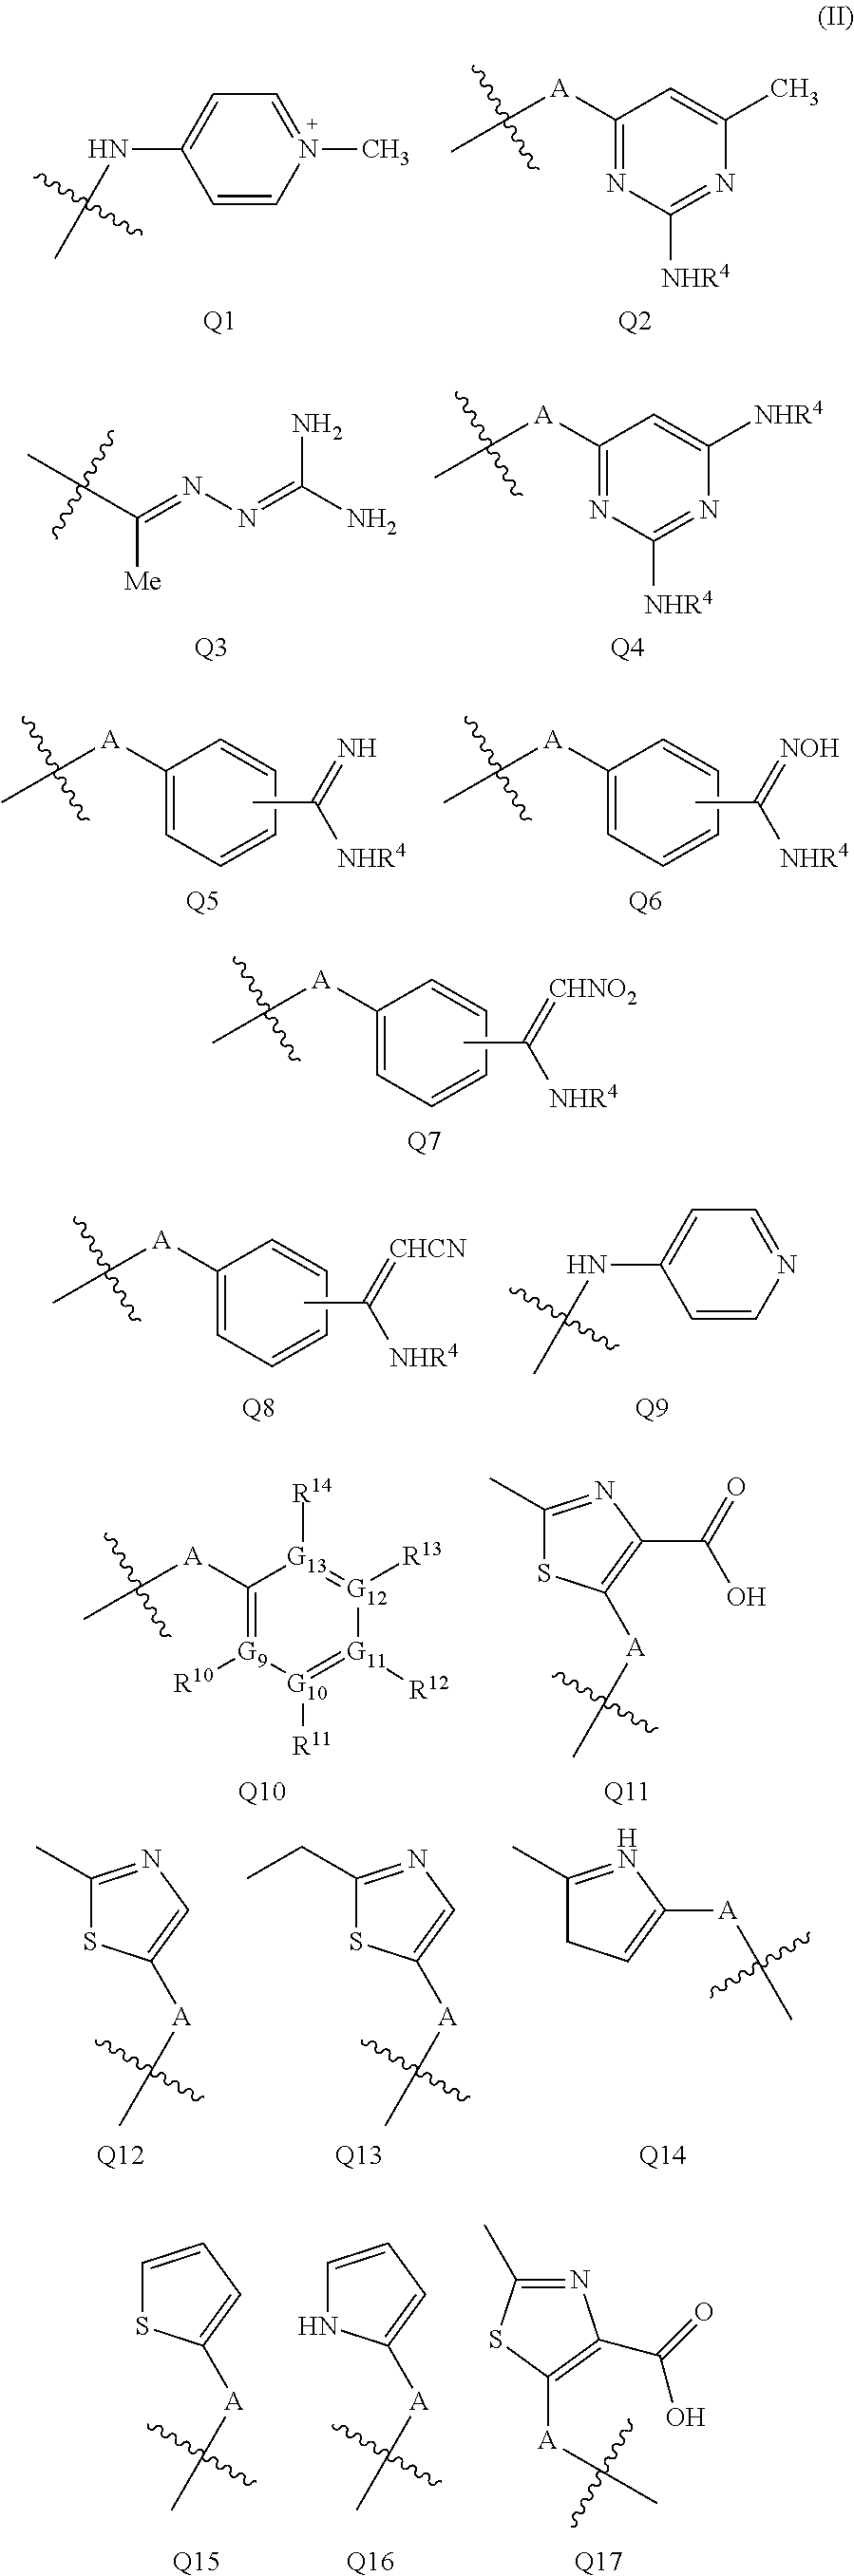 Quinoline derivatives for modulating DNA methylation